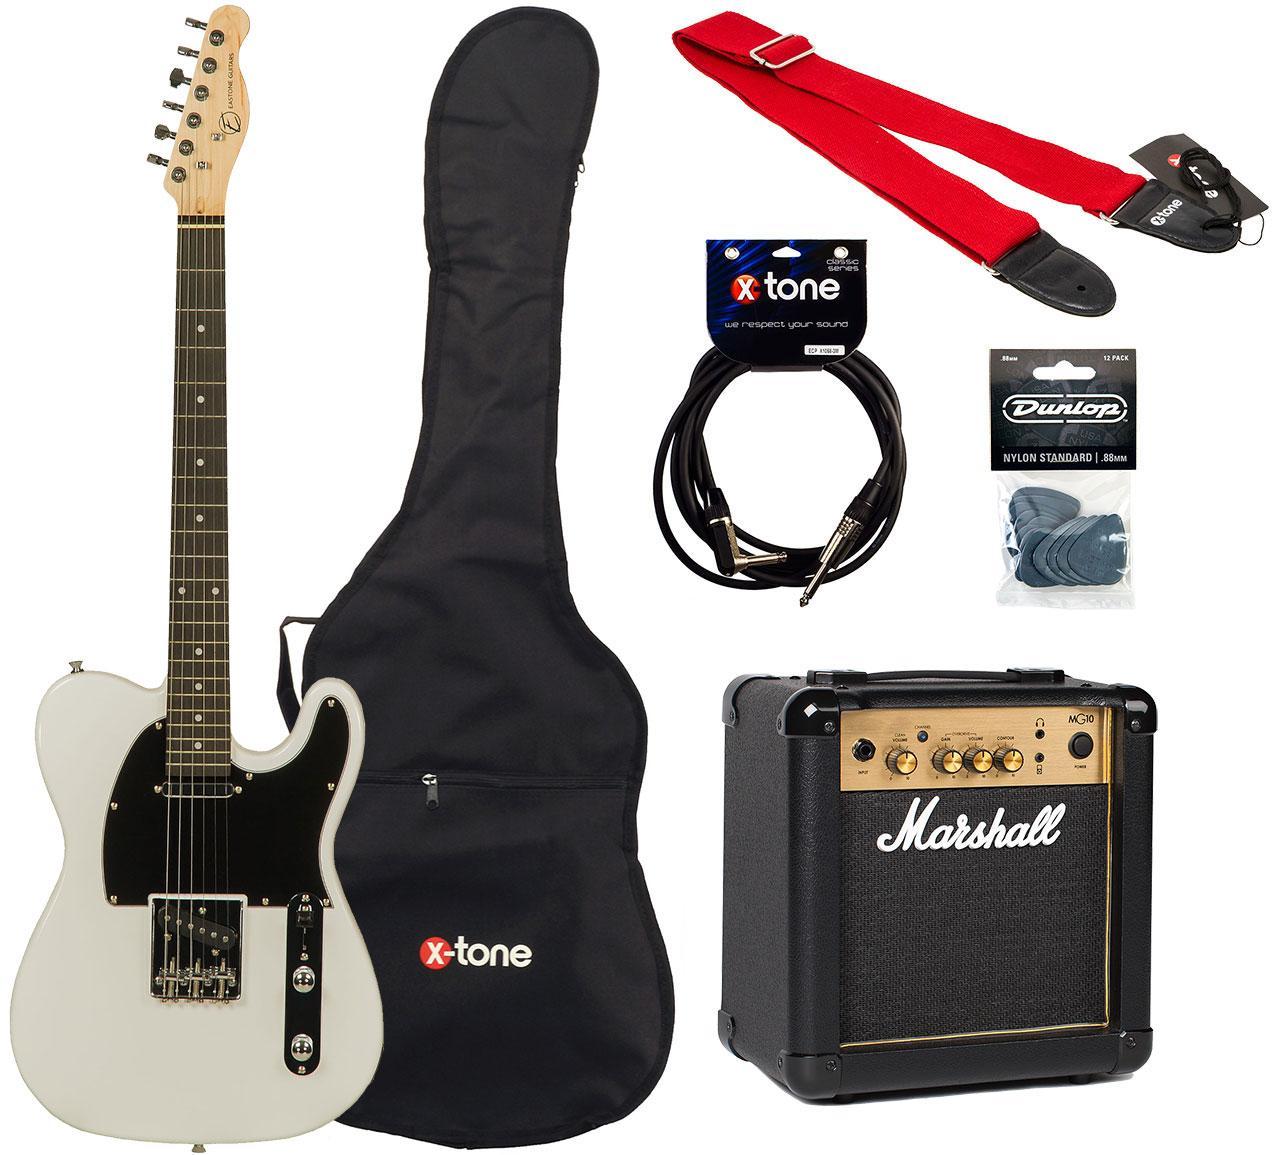 Elektrische gitaar set Eastone TL70 +Marshall MG10 +Accessories - Olympic white